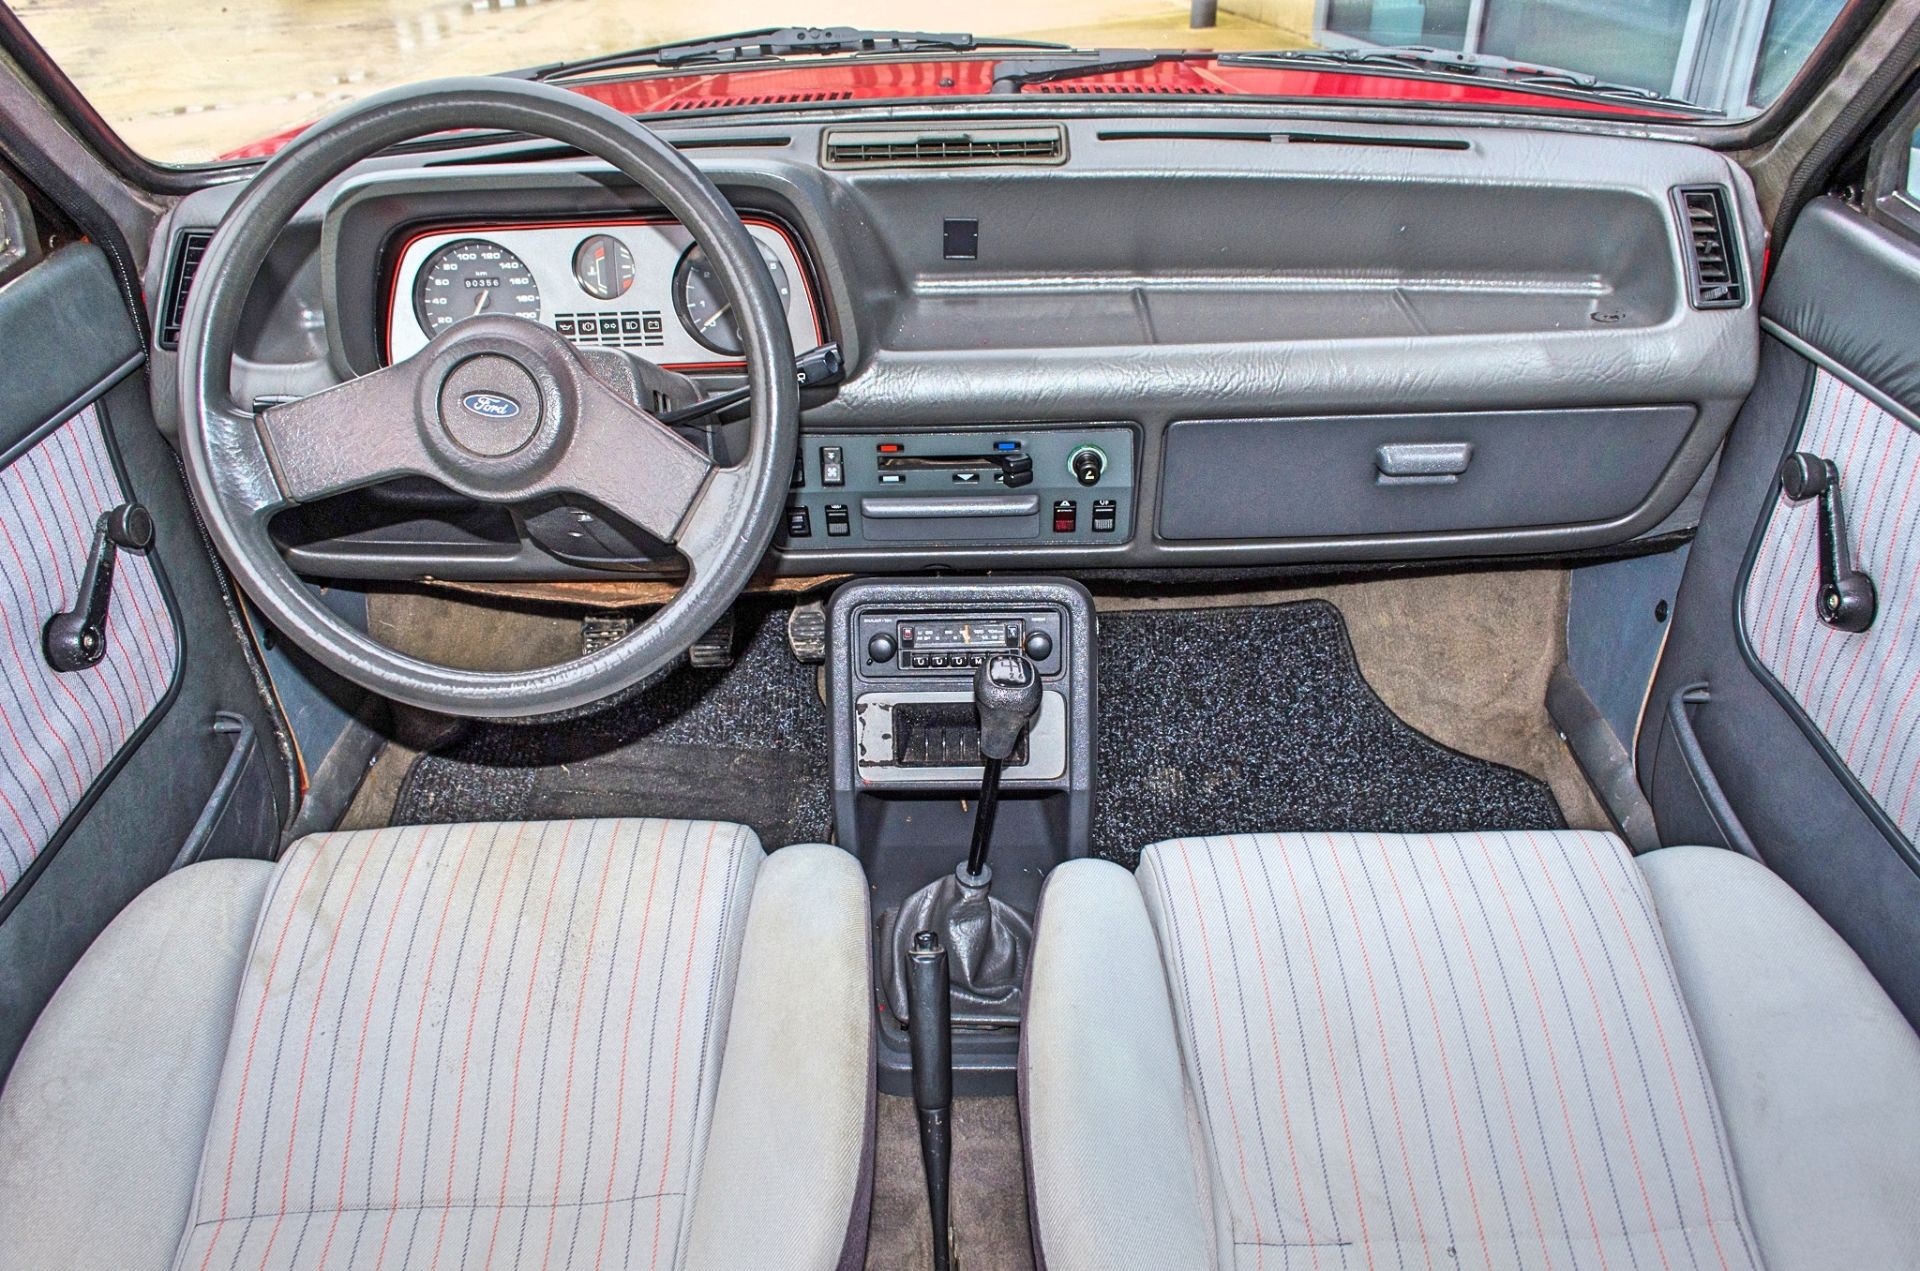 1983 Ford Fiesta XR2 1600cc 3 door hatchback - Image 33 of 47